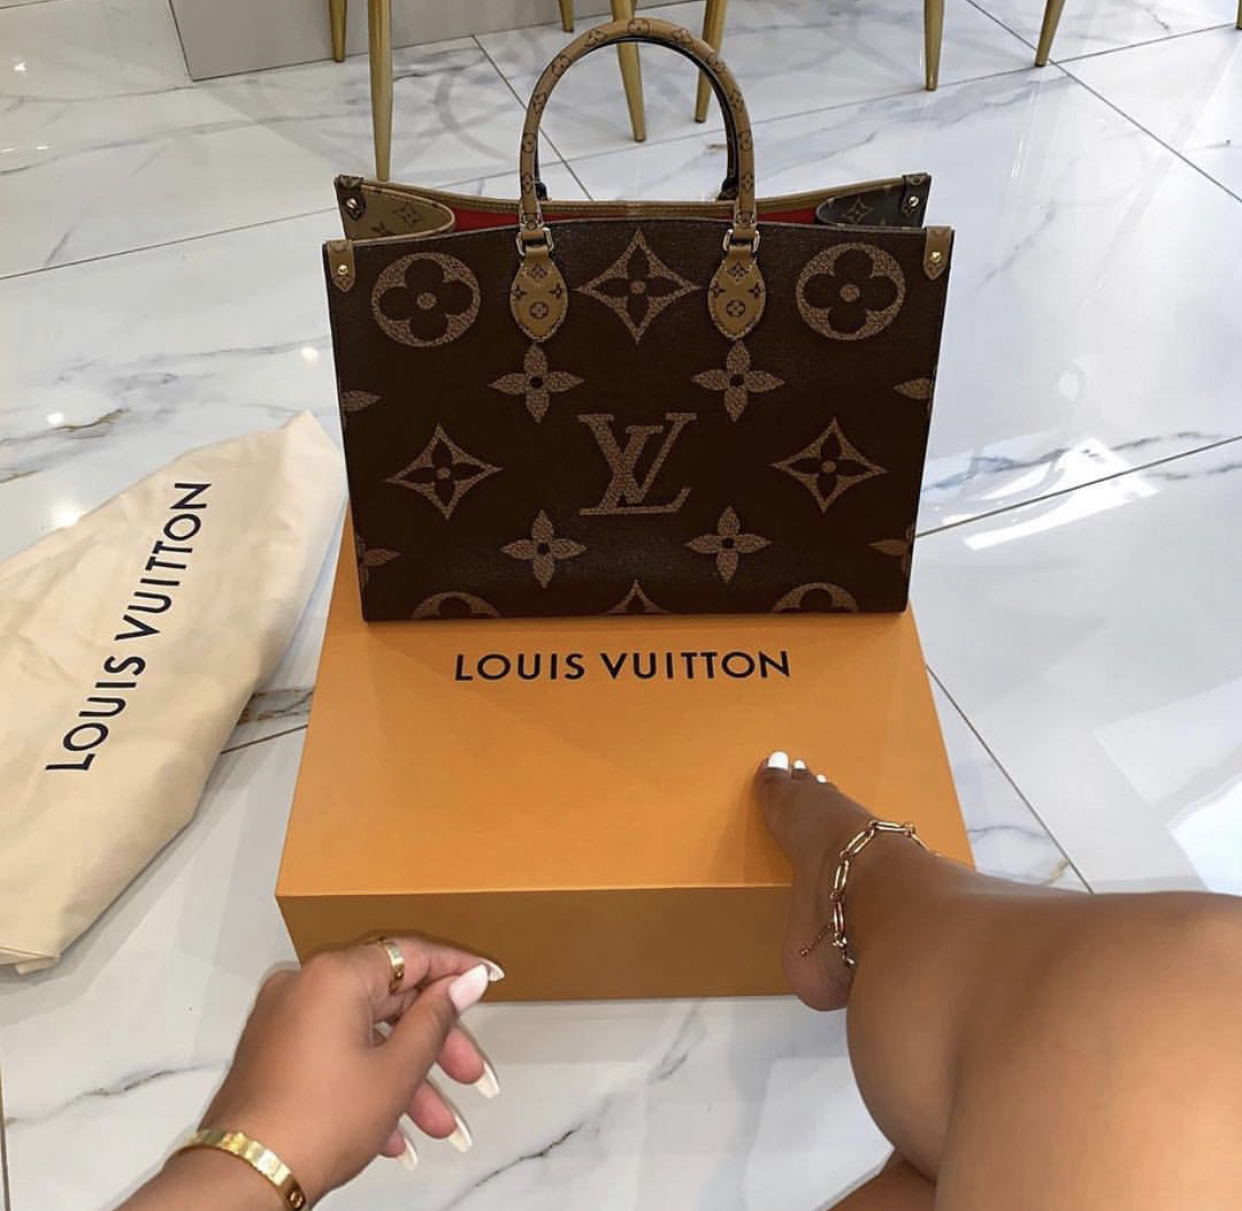 Louis Vuitton OnTheGo Bag Price - Brands Blogger